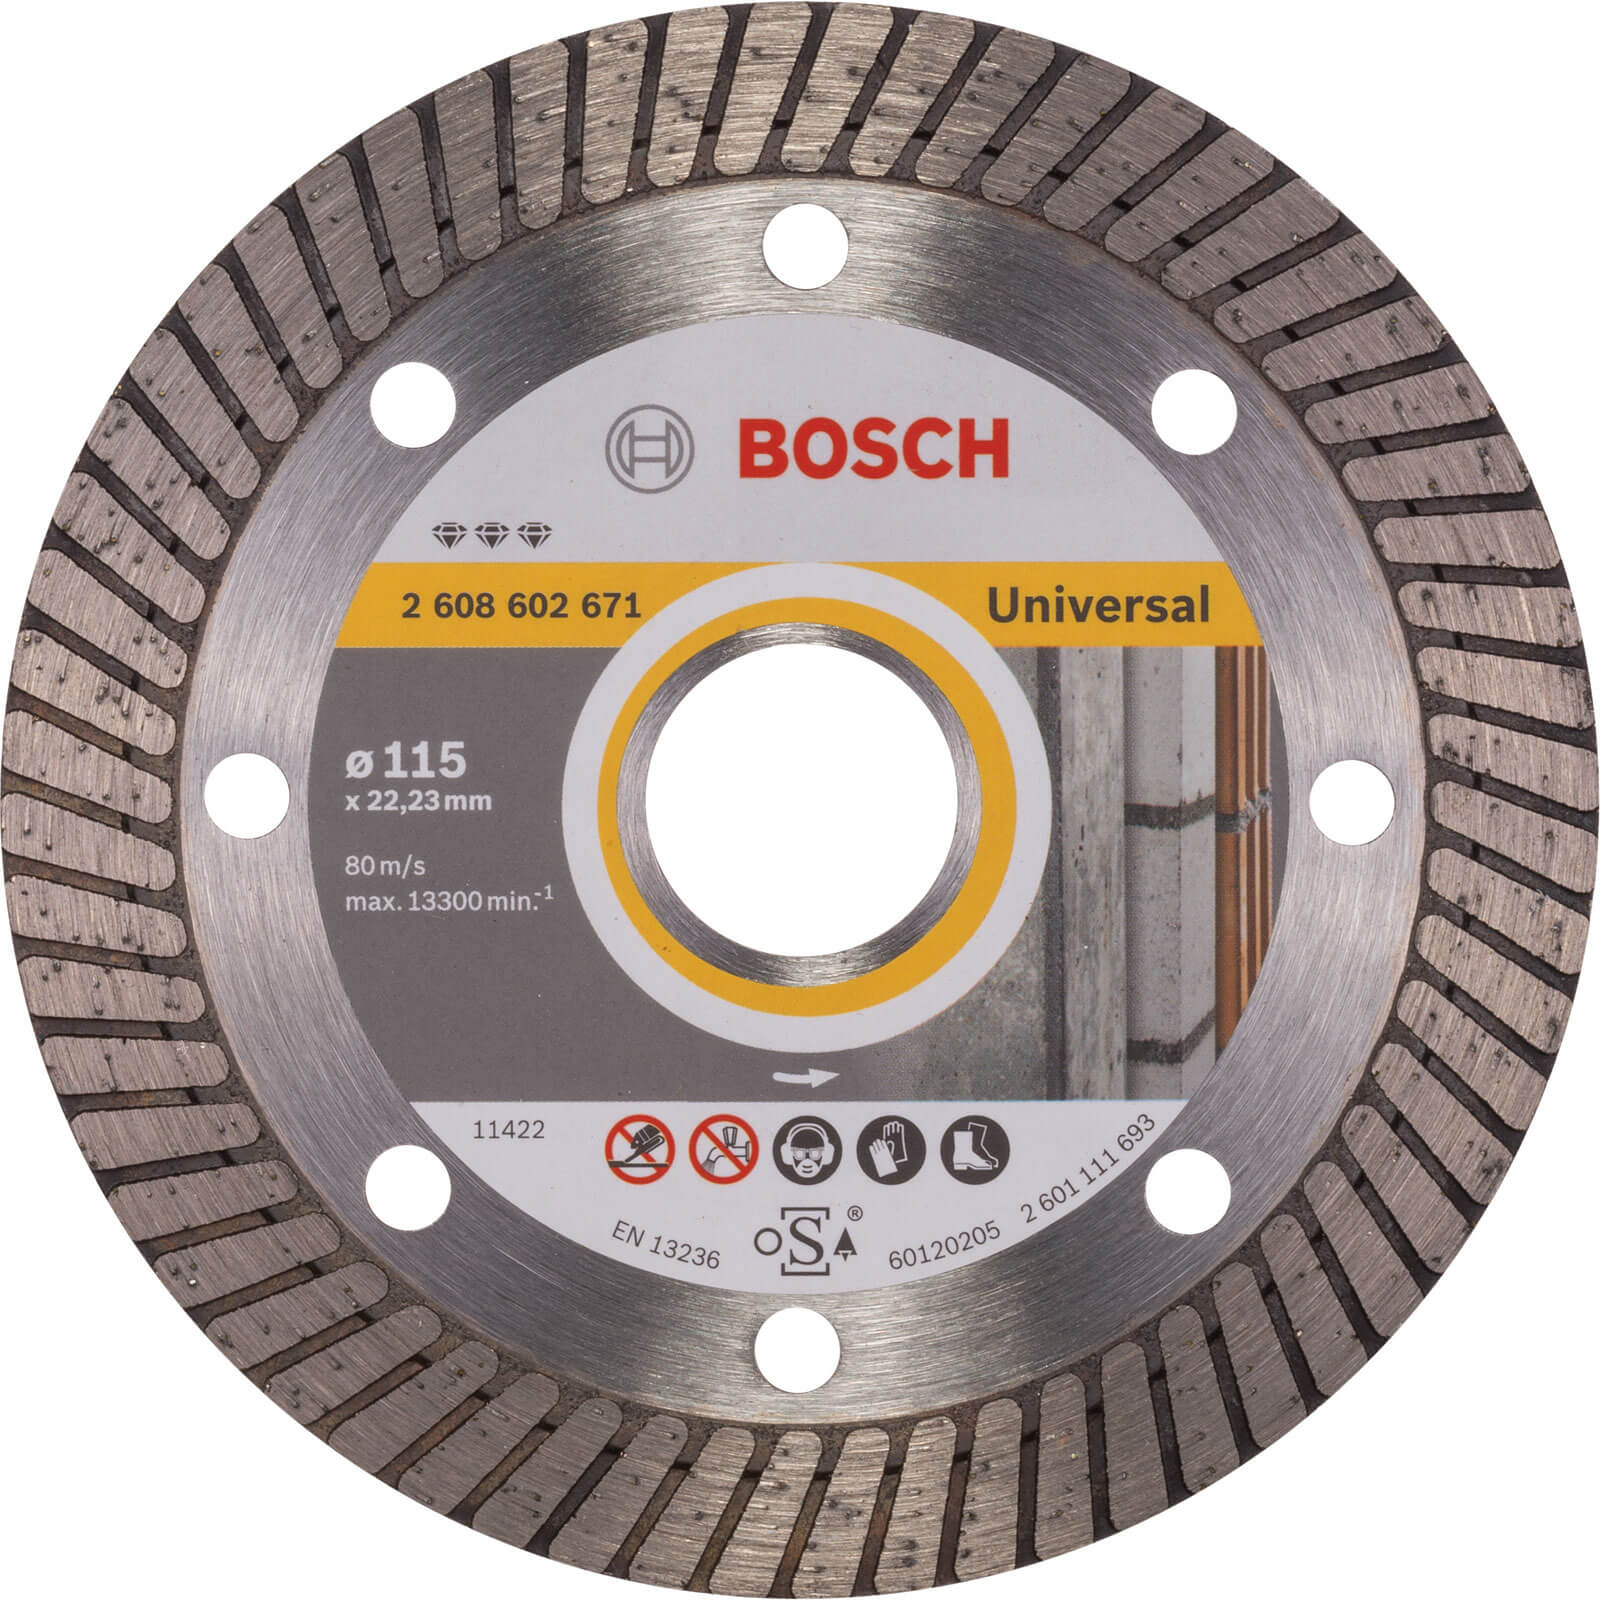 Image of Bosch Turbo Universal Diamond Cutting Disc 115mm